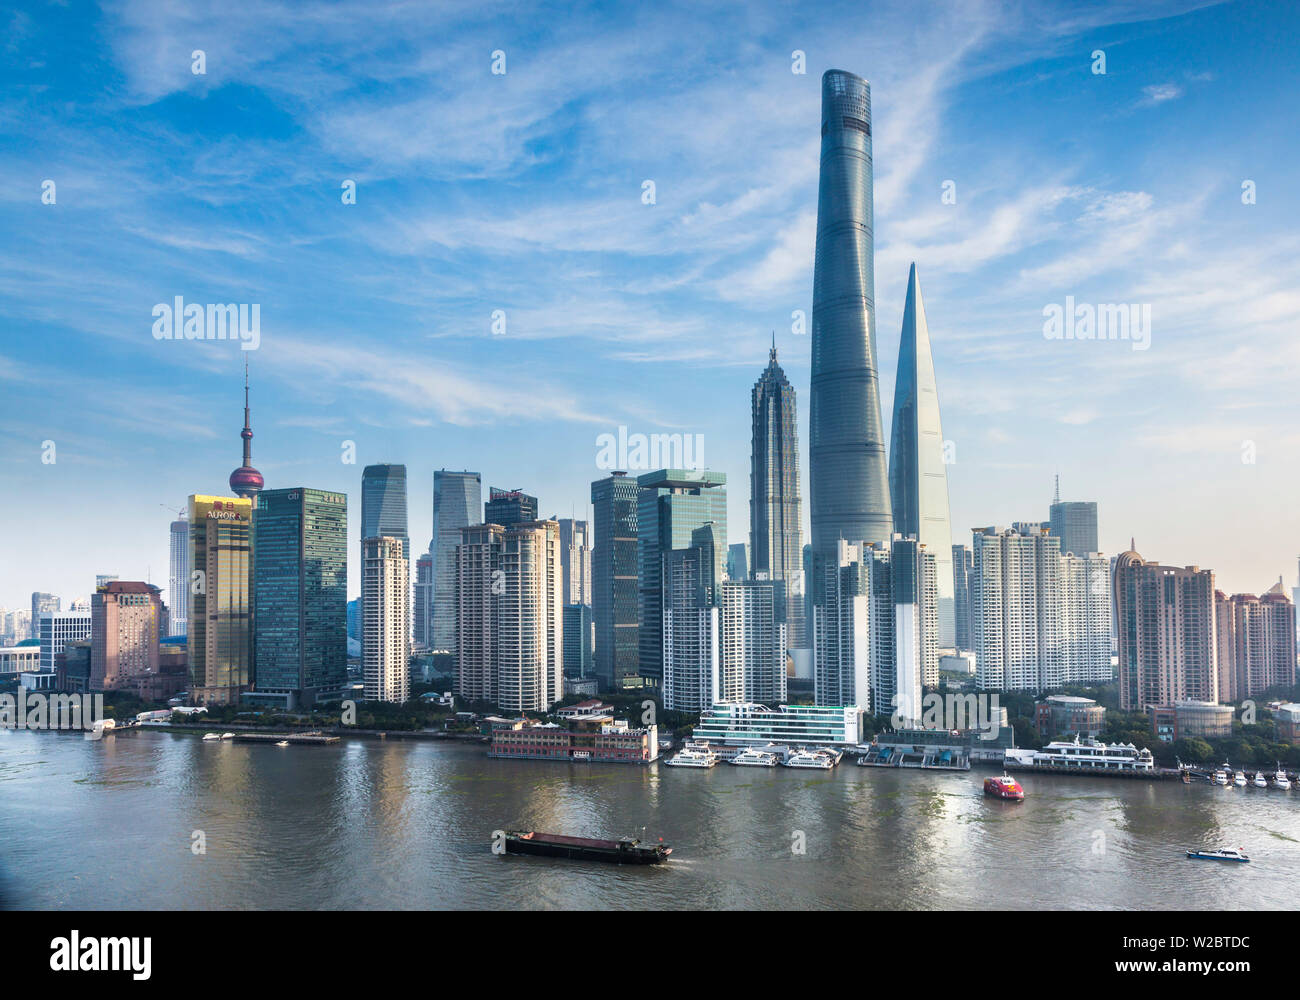 Shanghai Tower and the Pudong skyline across the Huangpu river, Shanghai, China Stock Photo